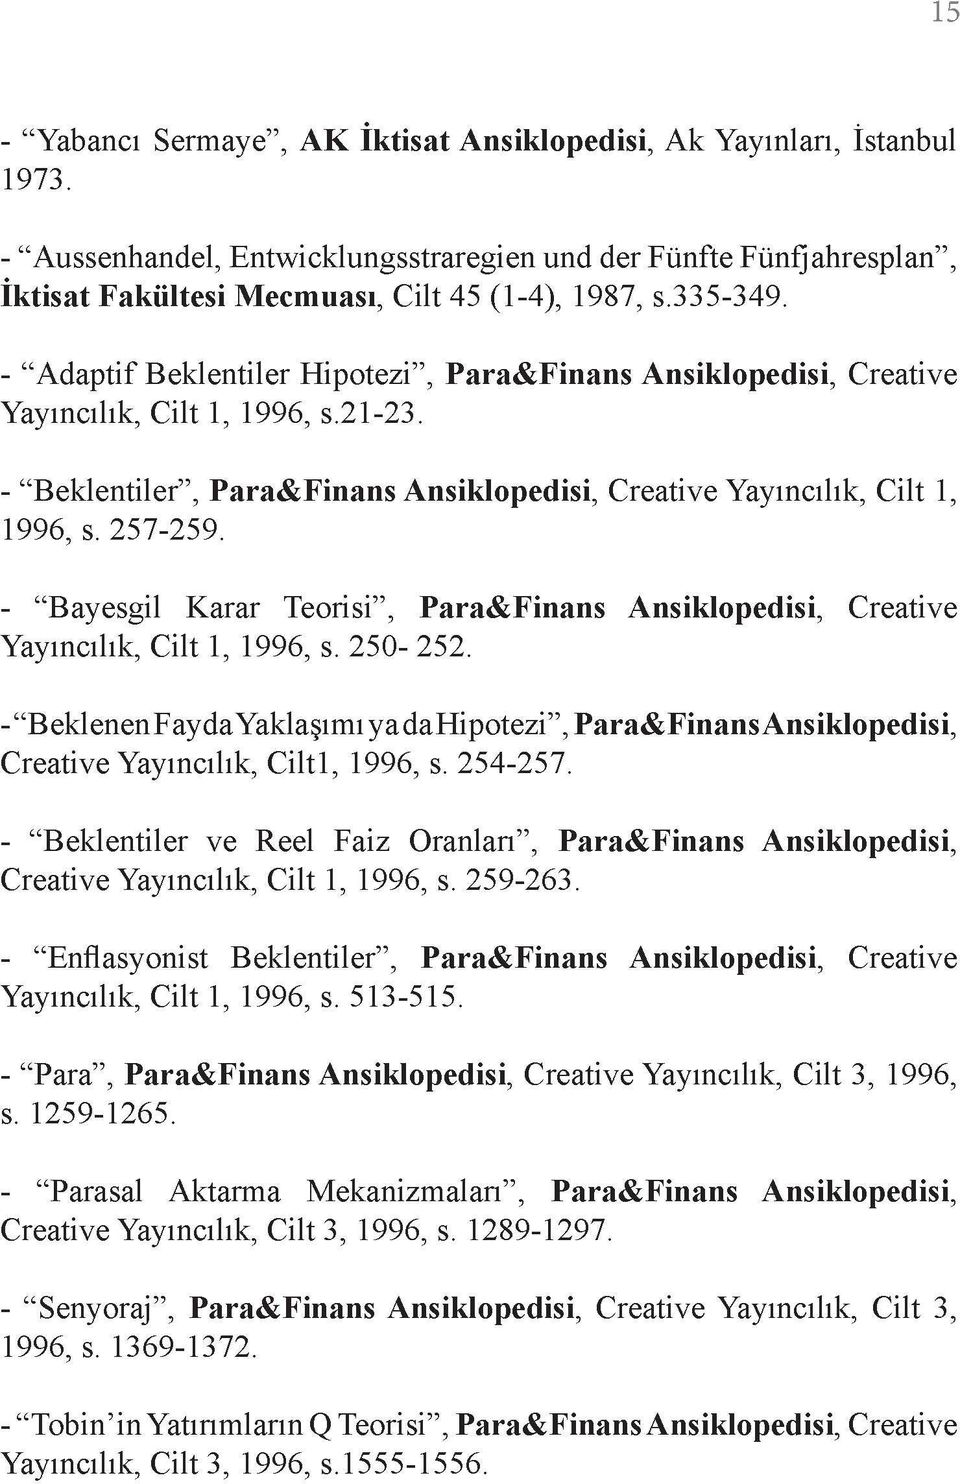 257-259. - "Bayesgil Karar Teorisi", Para&Finans Ansiklopedisi, Creative Yayıncılık, Cilt 1, 1996, s. 250-252.